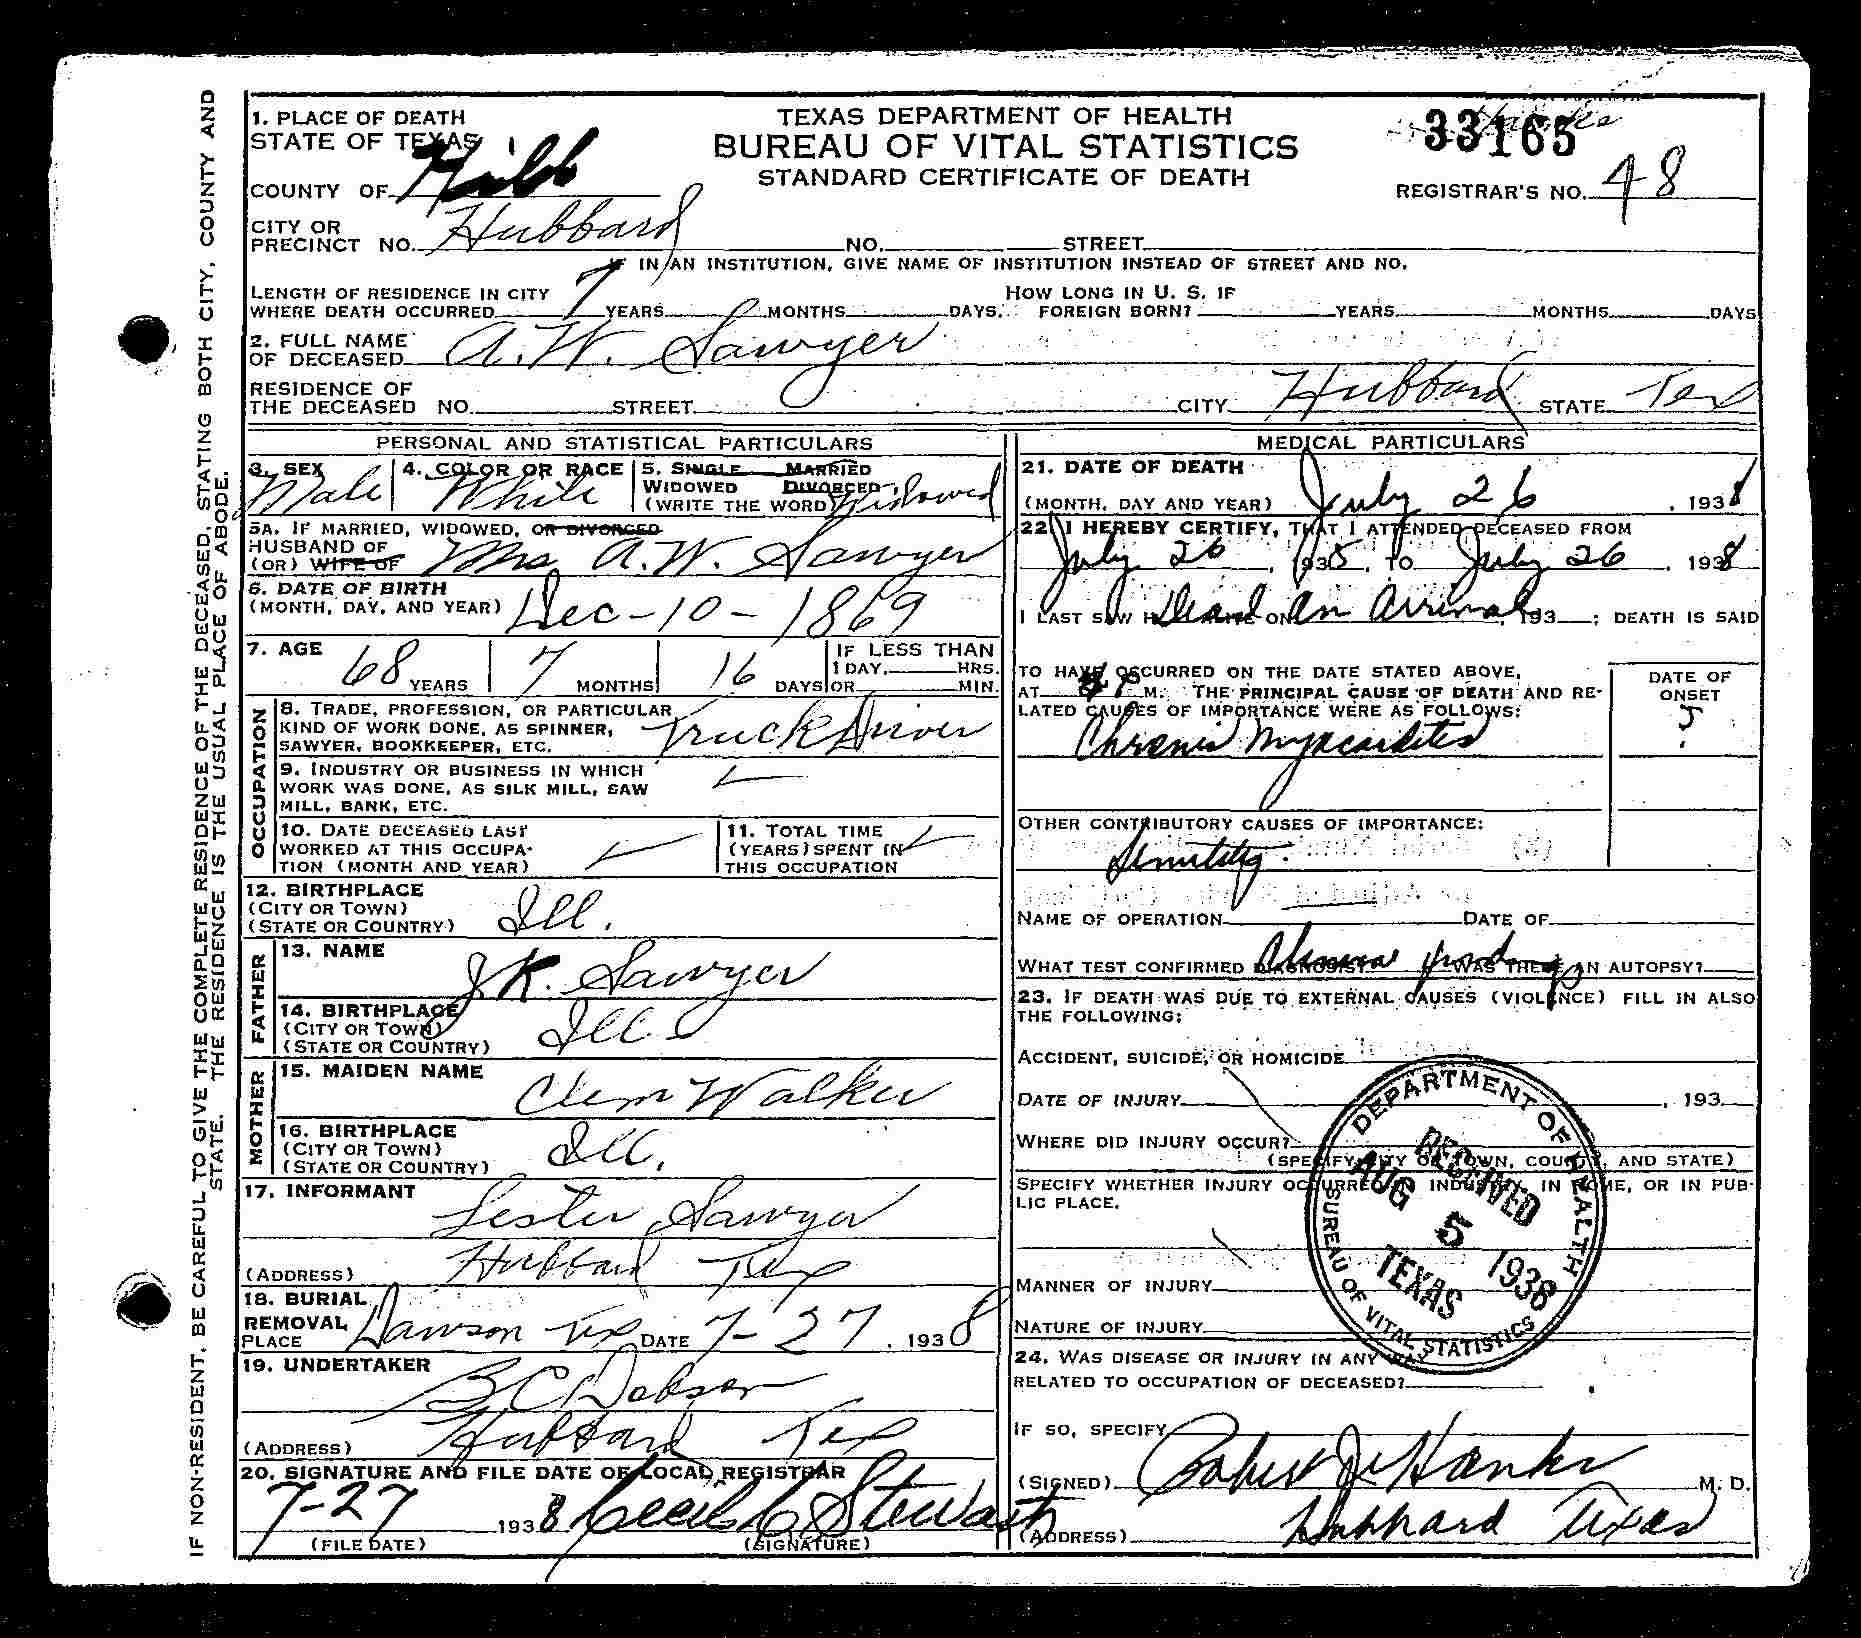 Aaron W. Sawyer, death certificate, 1938, Hill County, Texas